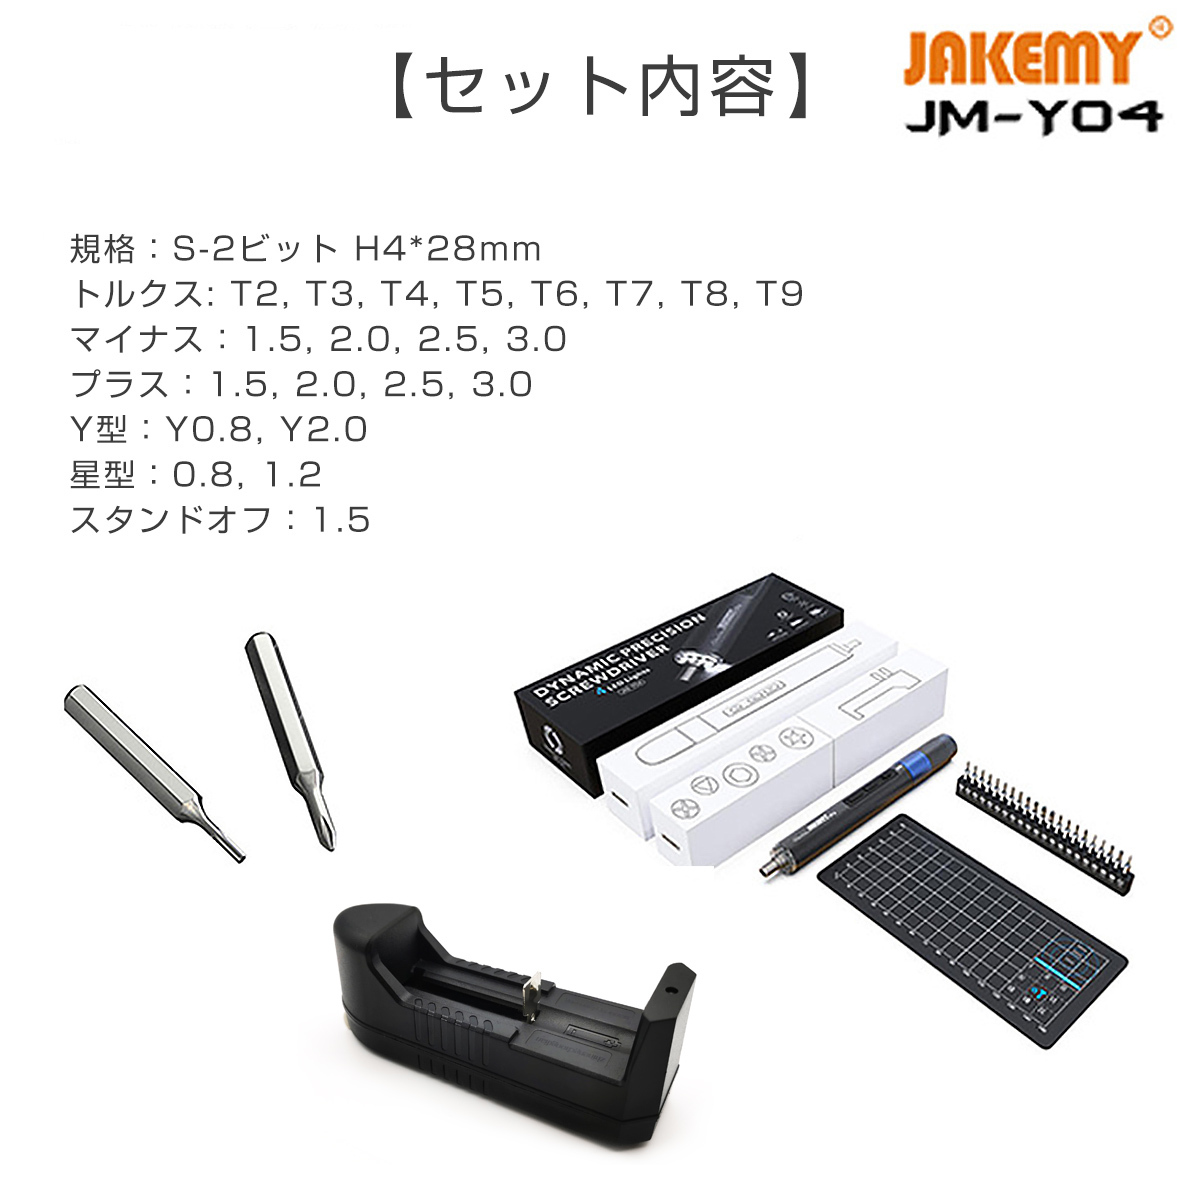 JAKEMY 21in1 電動精密ドライバーセット LEDライト搭載 特殊ドライバー 磁石付き ネジ回し 修理キット 多機能ツールキット スマホ  タブレット 腕時計 1ヶ月保証